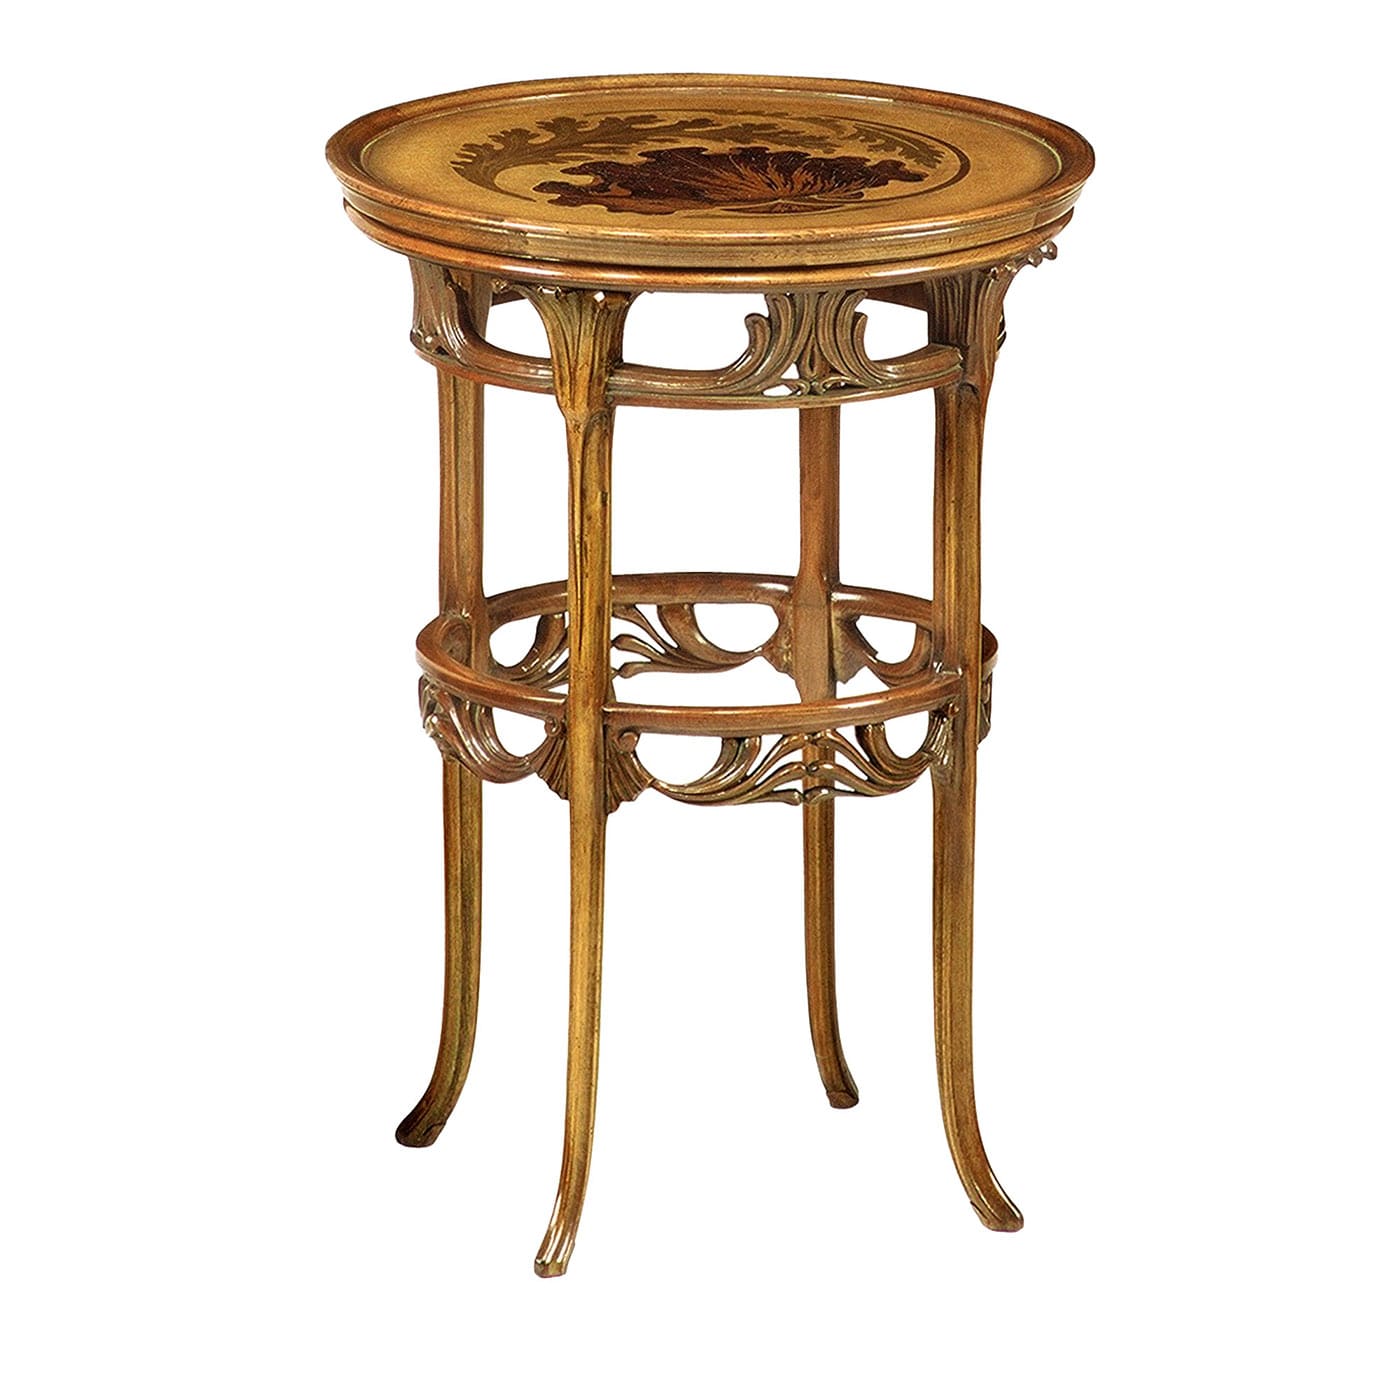 French Art Nouveau-Style Inlaid Side Table by Ernesto Basile - Cugini Lanzani